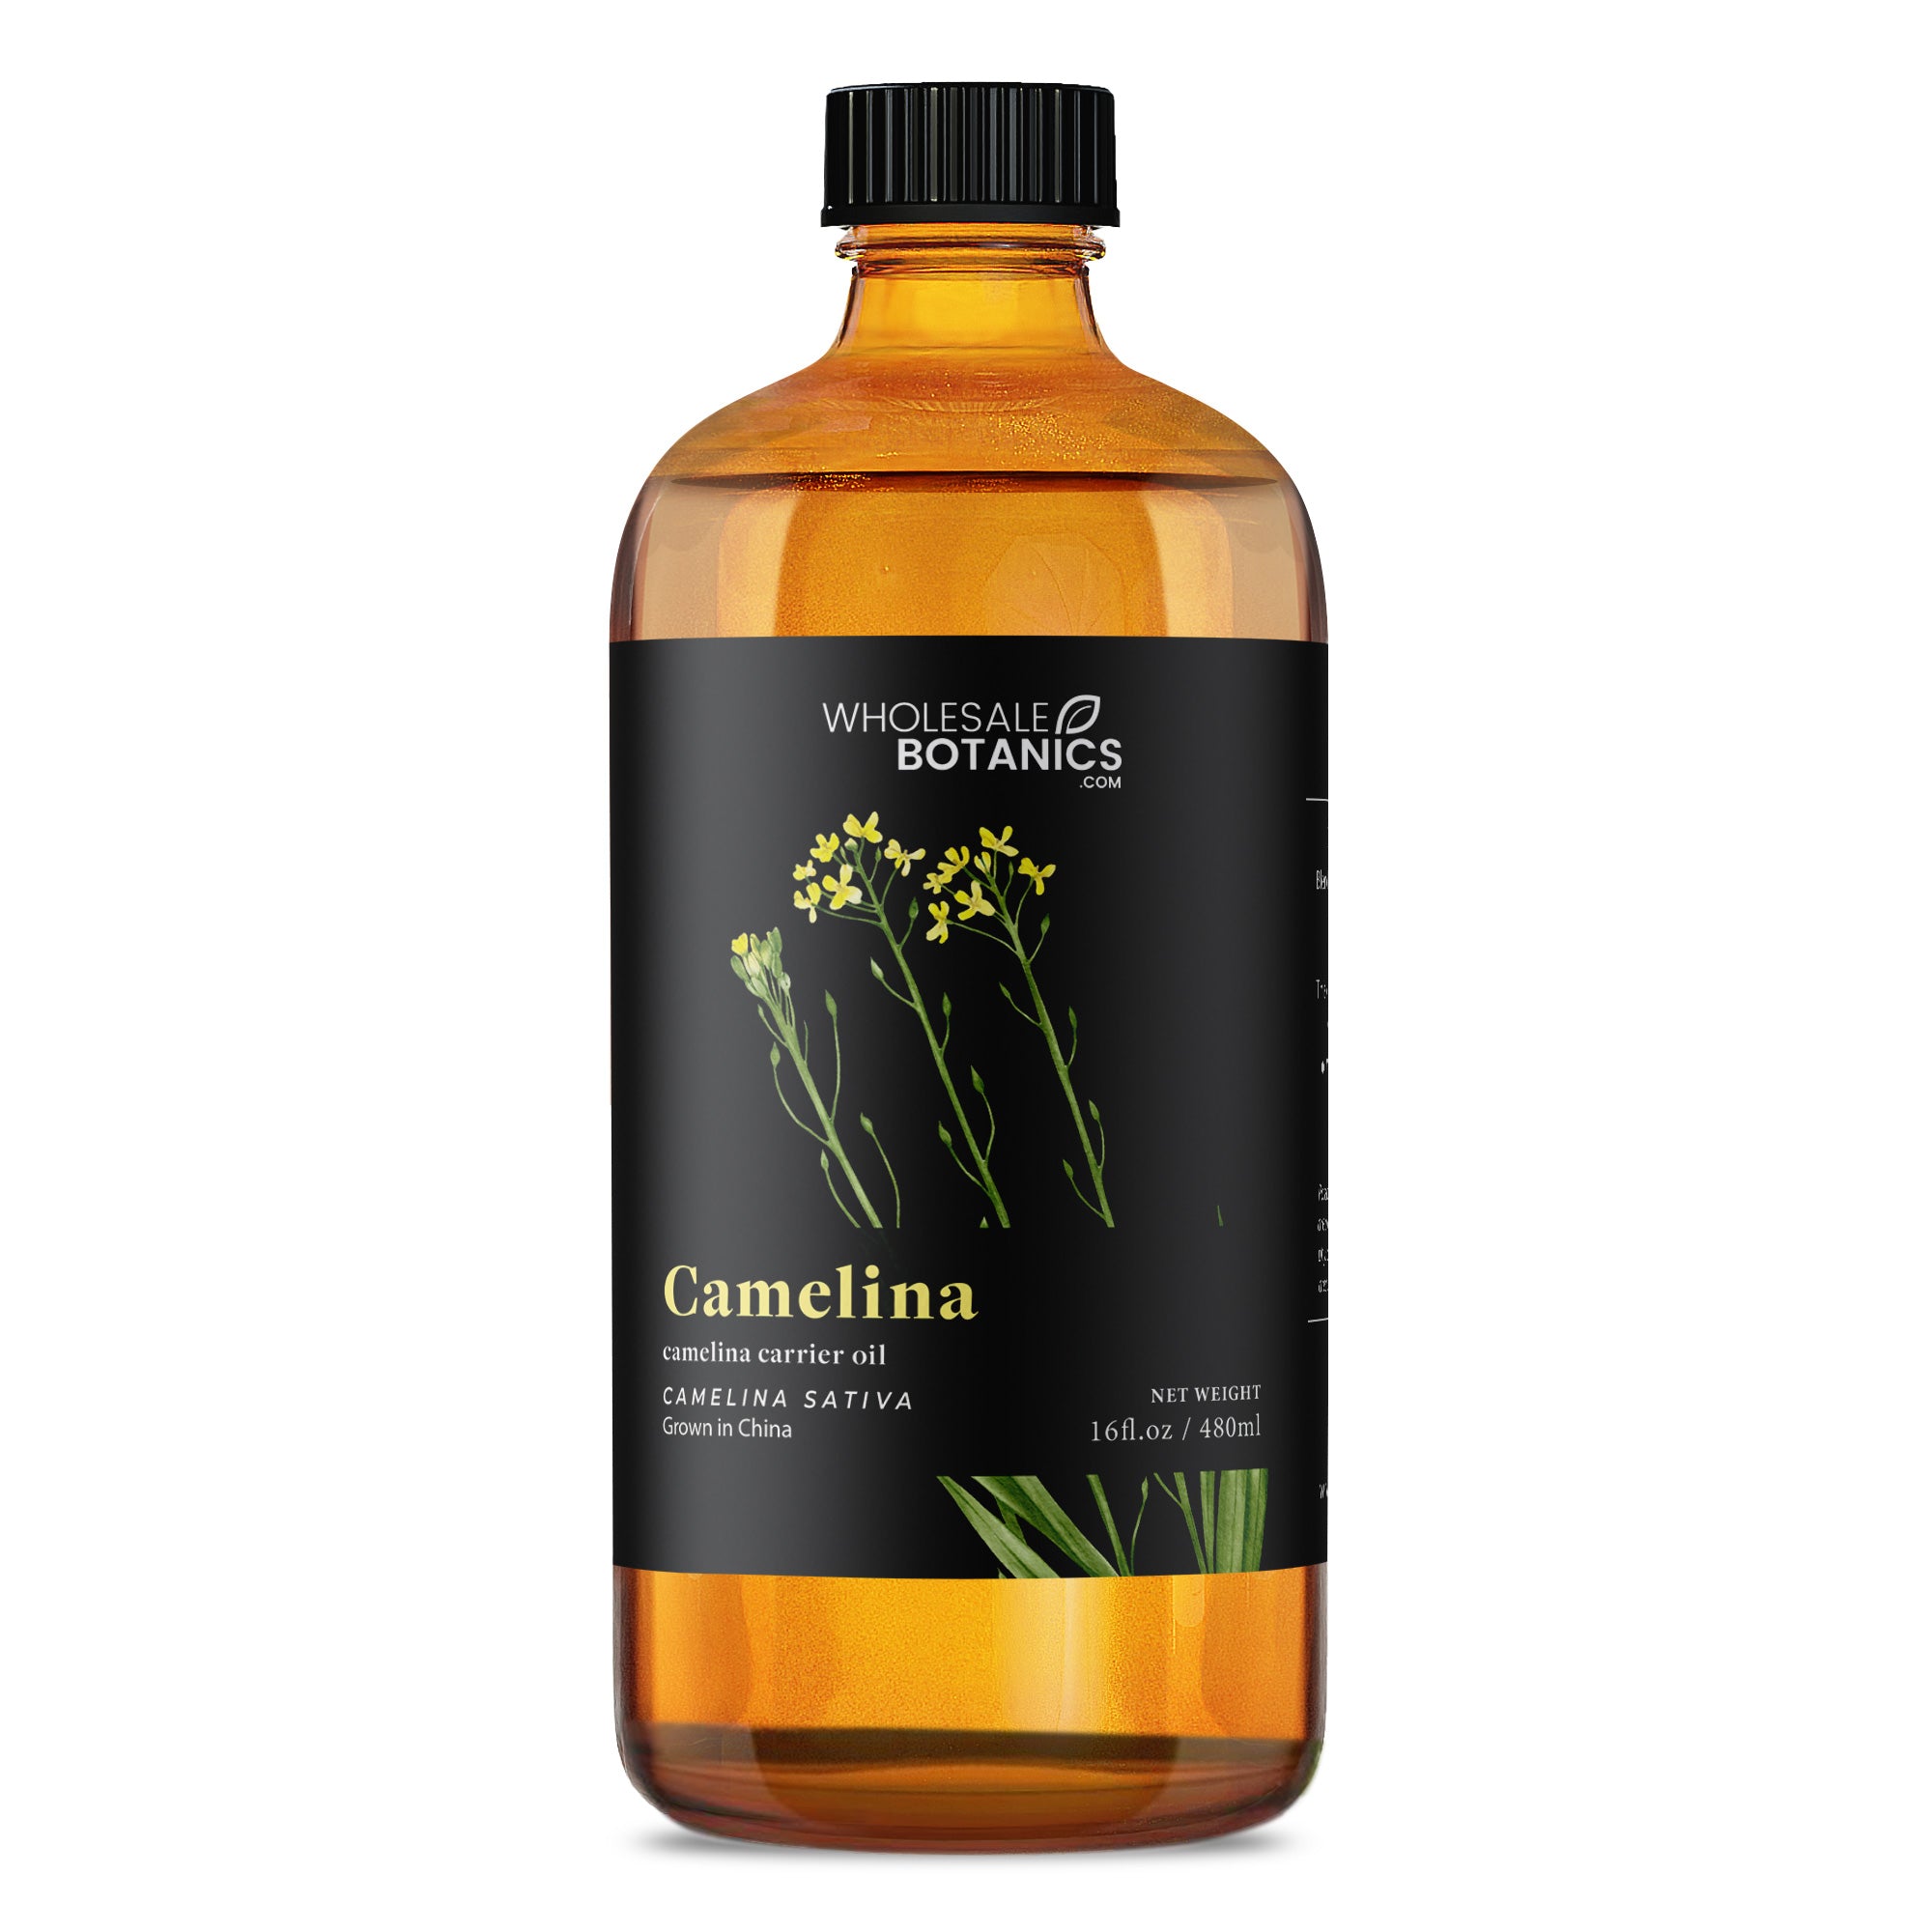 Camelina Oil